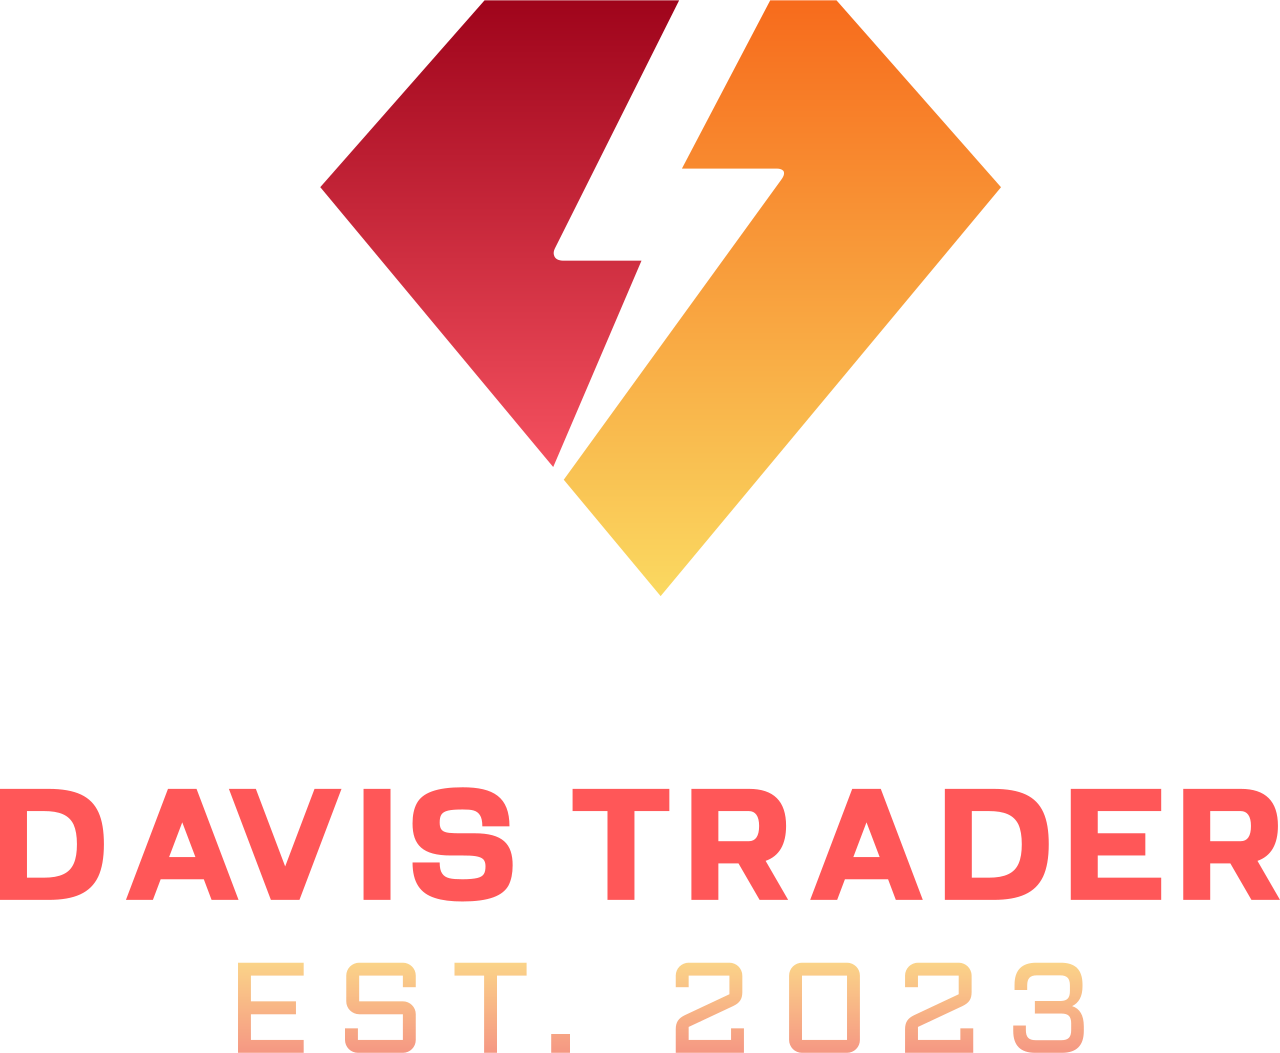 Davis Trader 's web page